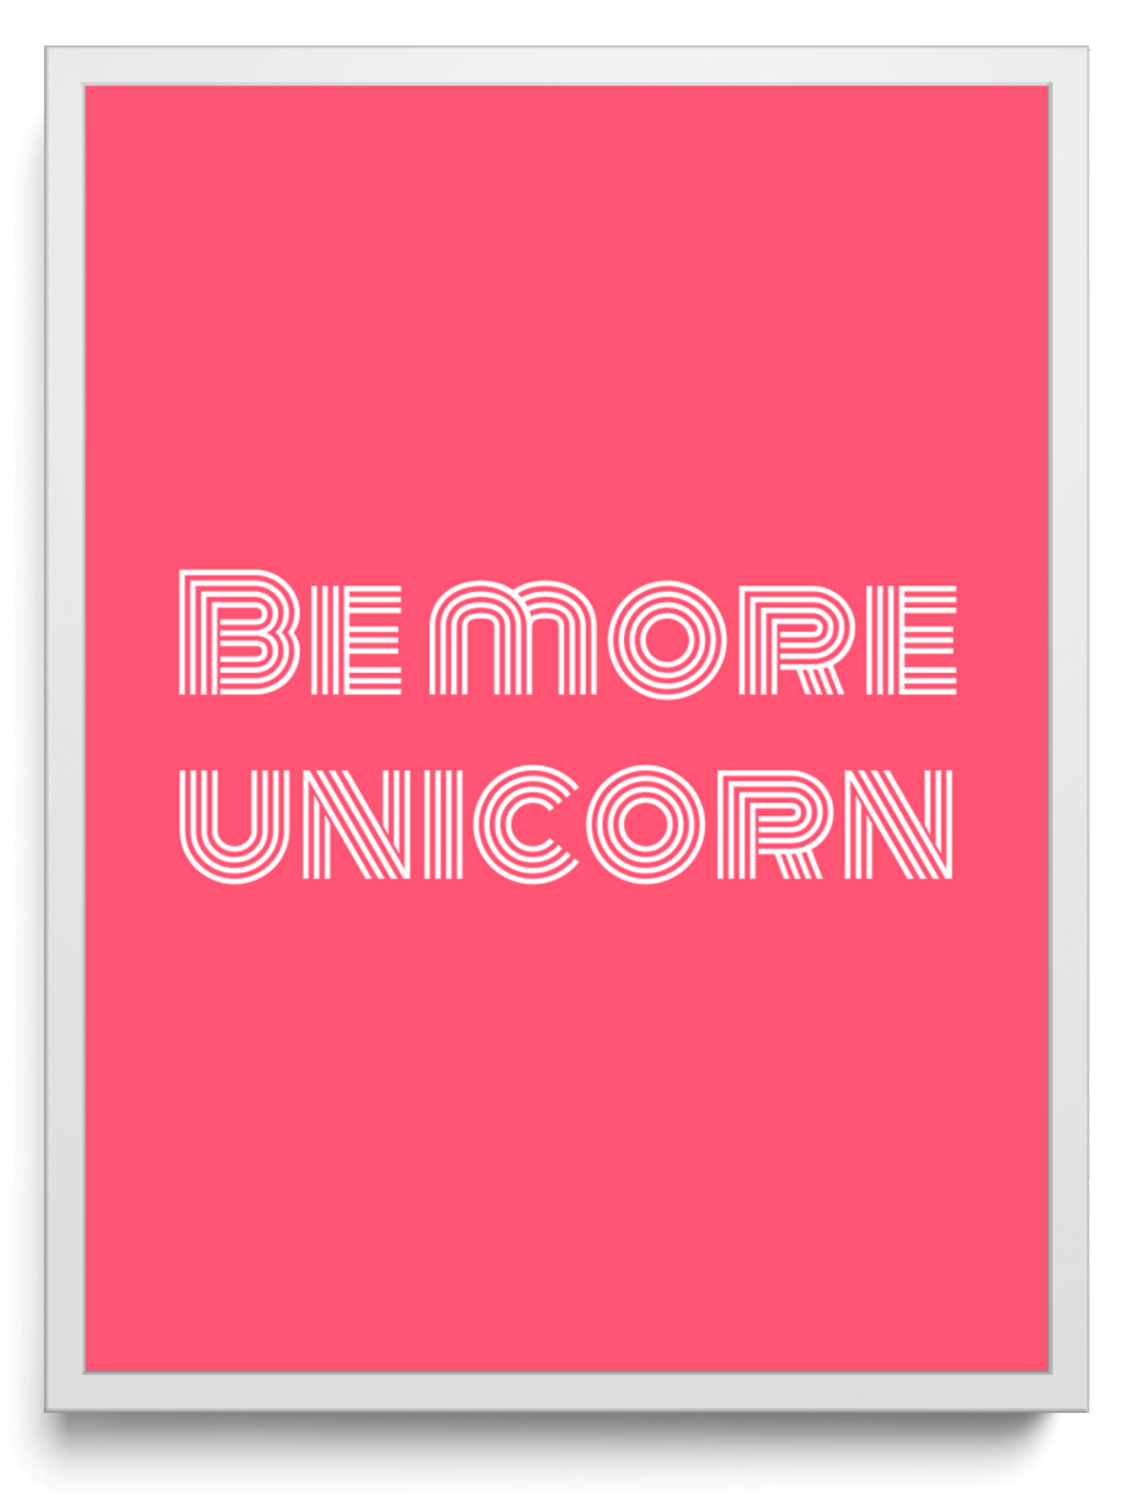 Be more unicorn framed typographic print